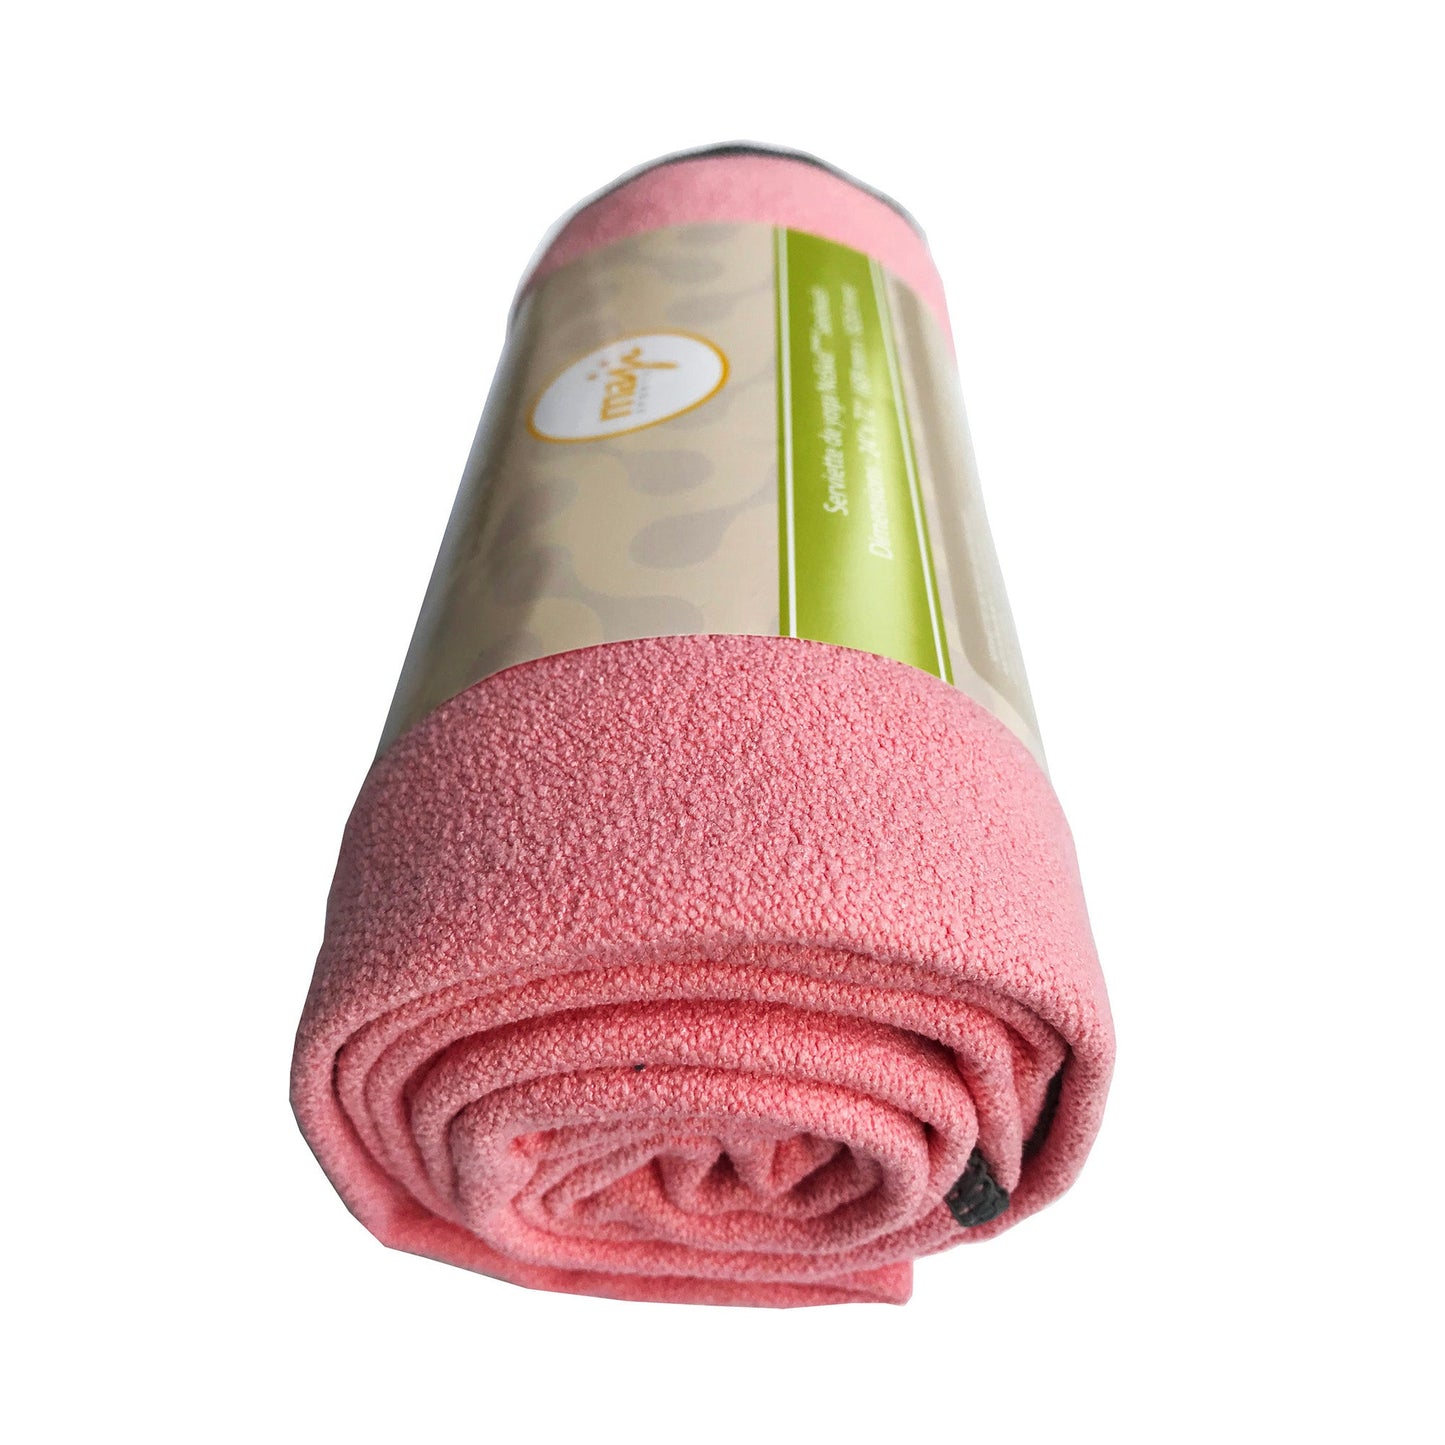 Noskid Sandwash Yoga Towel